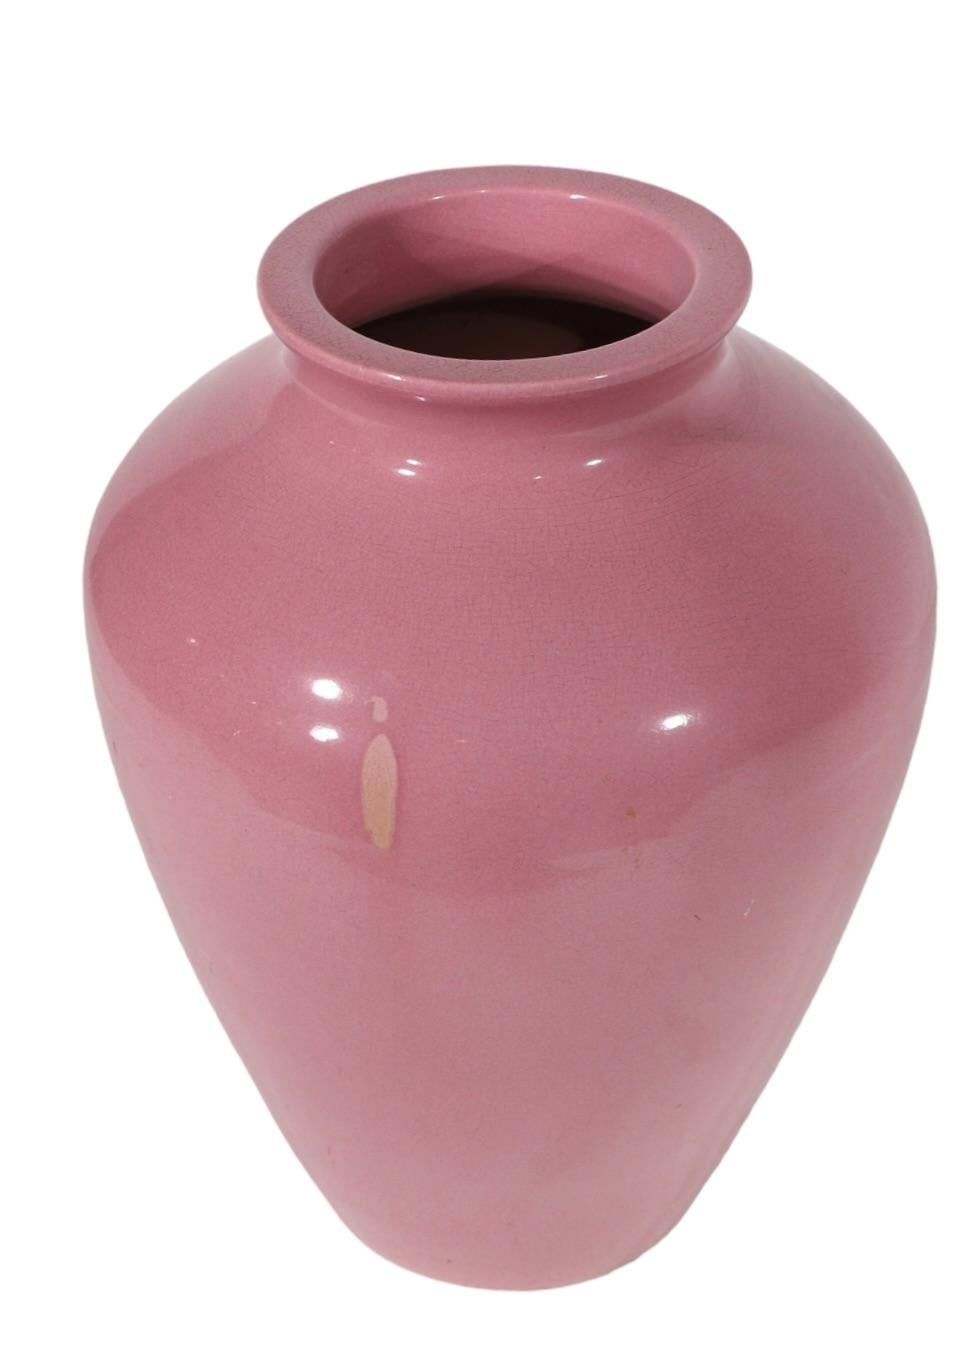 Mid-20th Century Vintage Arts and Crafts  Art Deco  Sand Jar - Dusky Pink Glaze For Sale